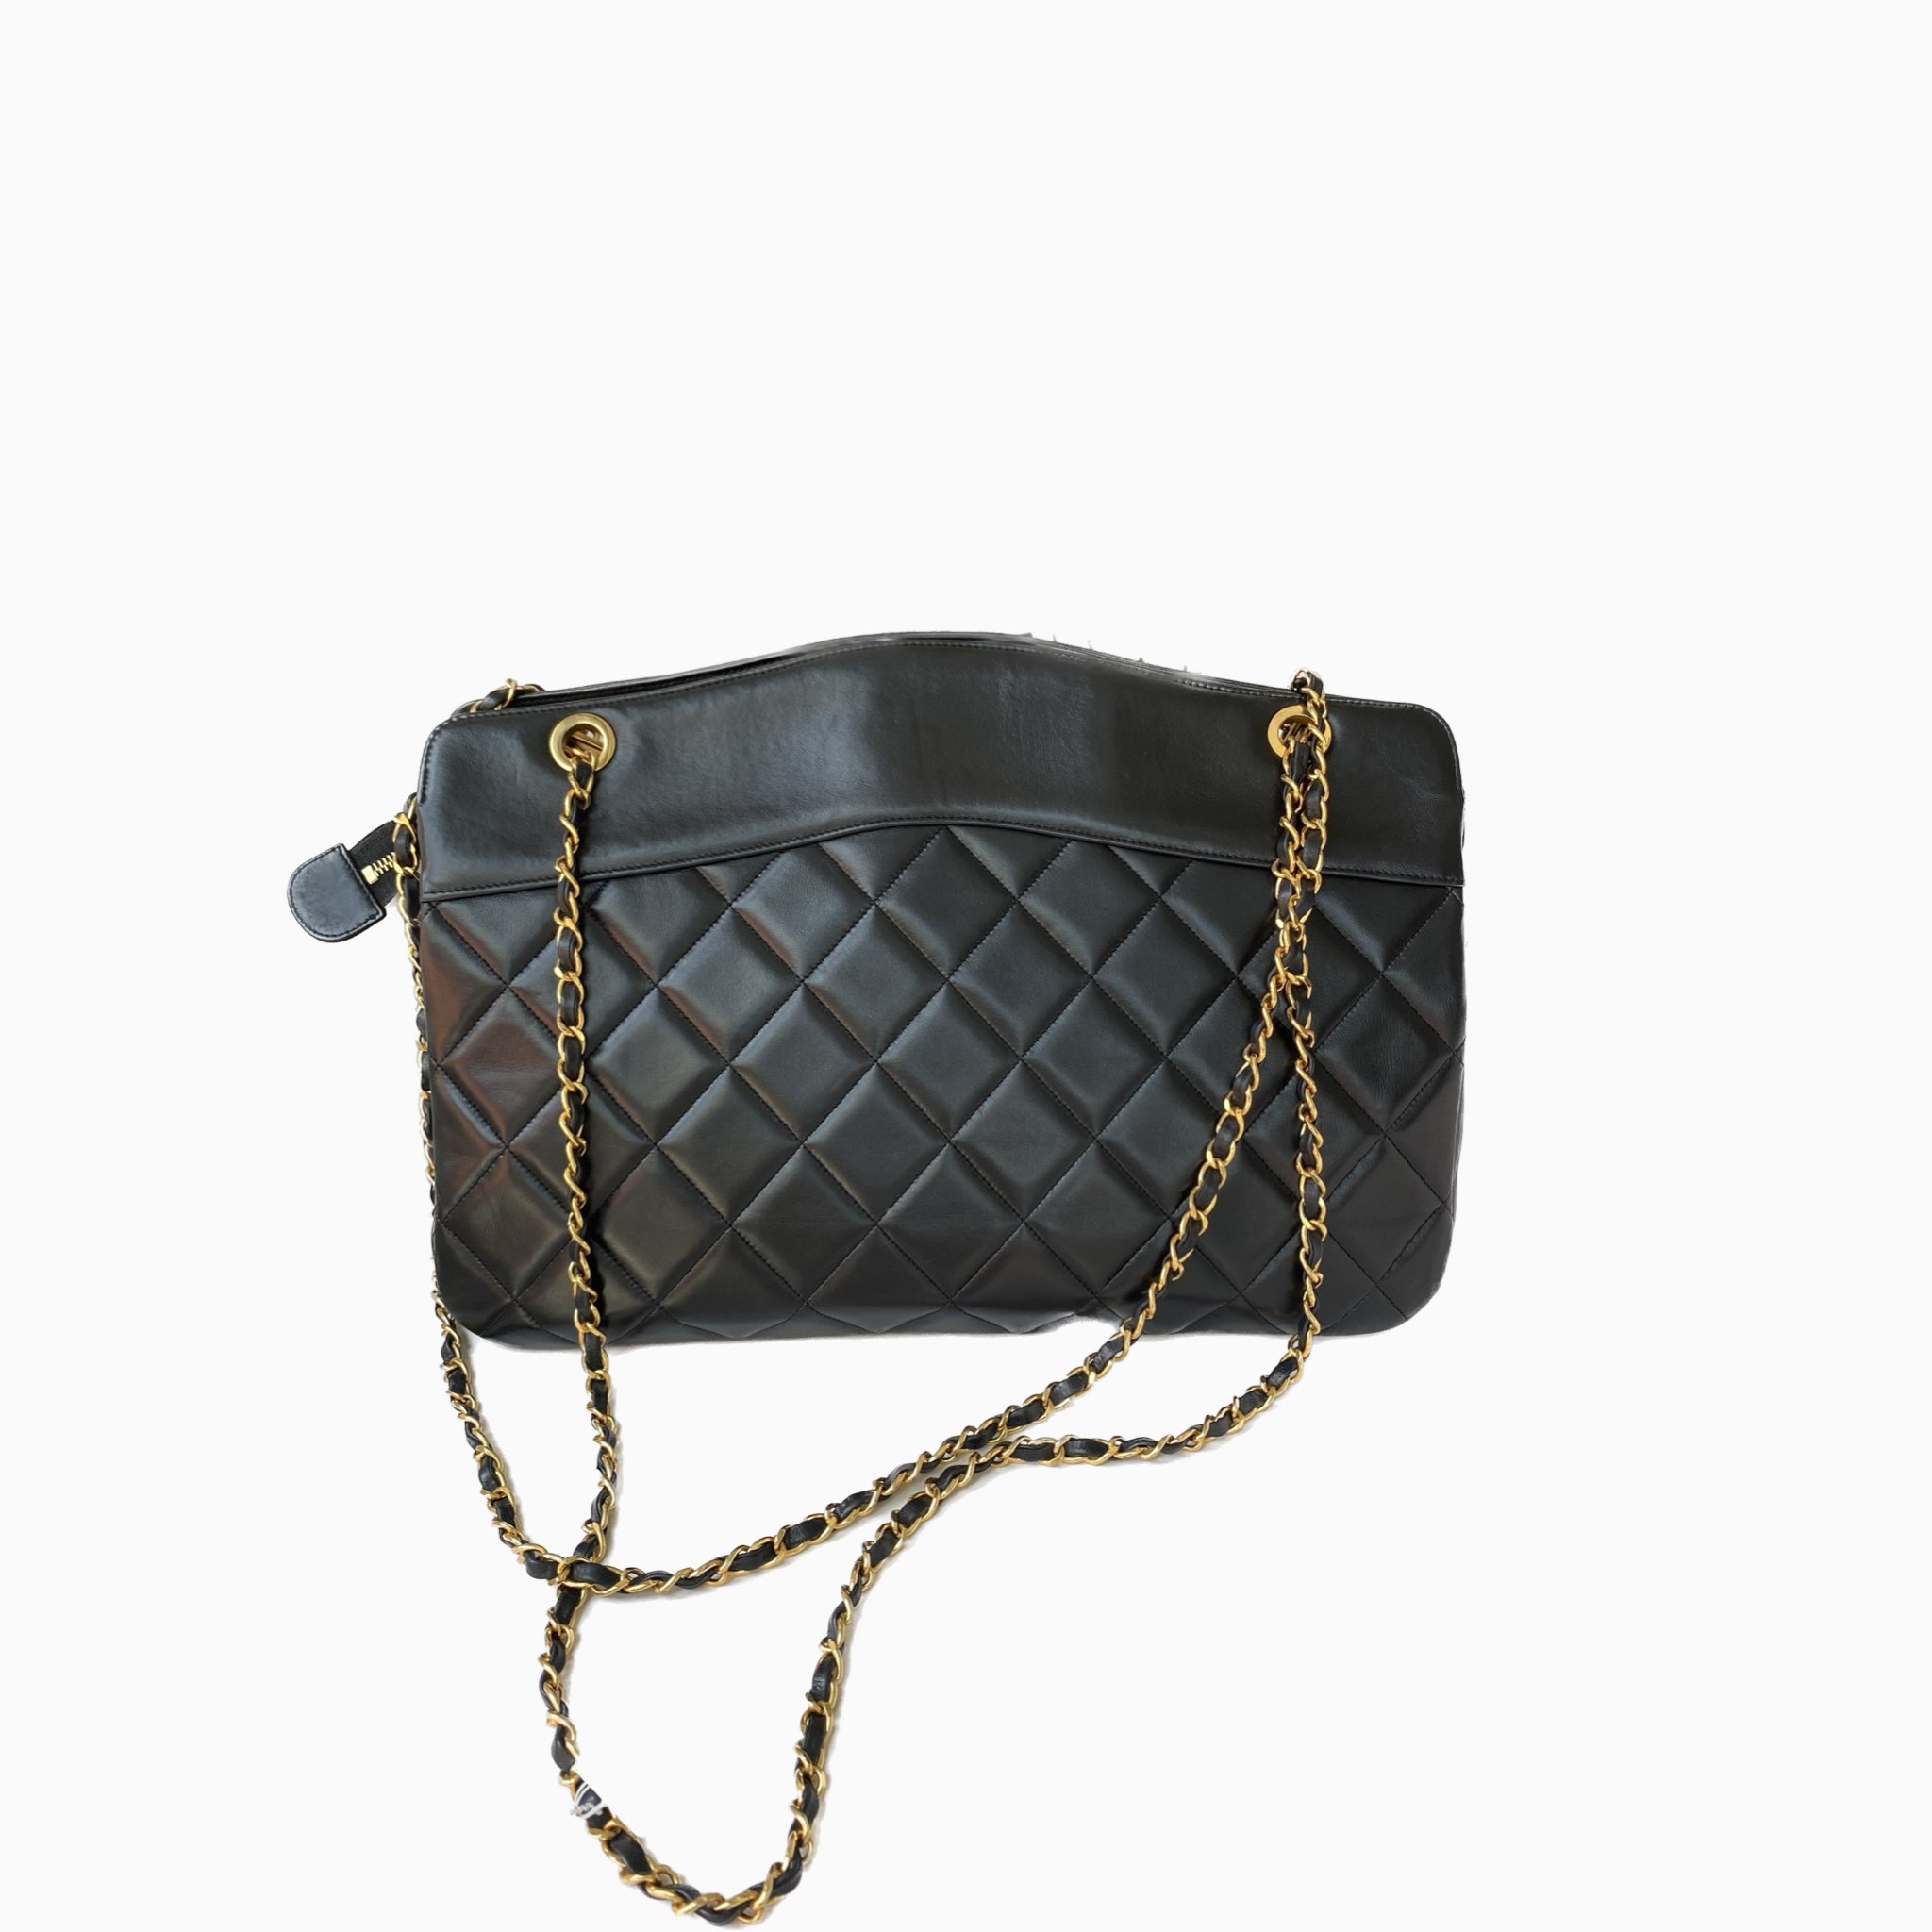 Chanel Matelasse Womens Shoulder Bags, Black